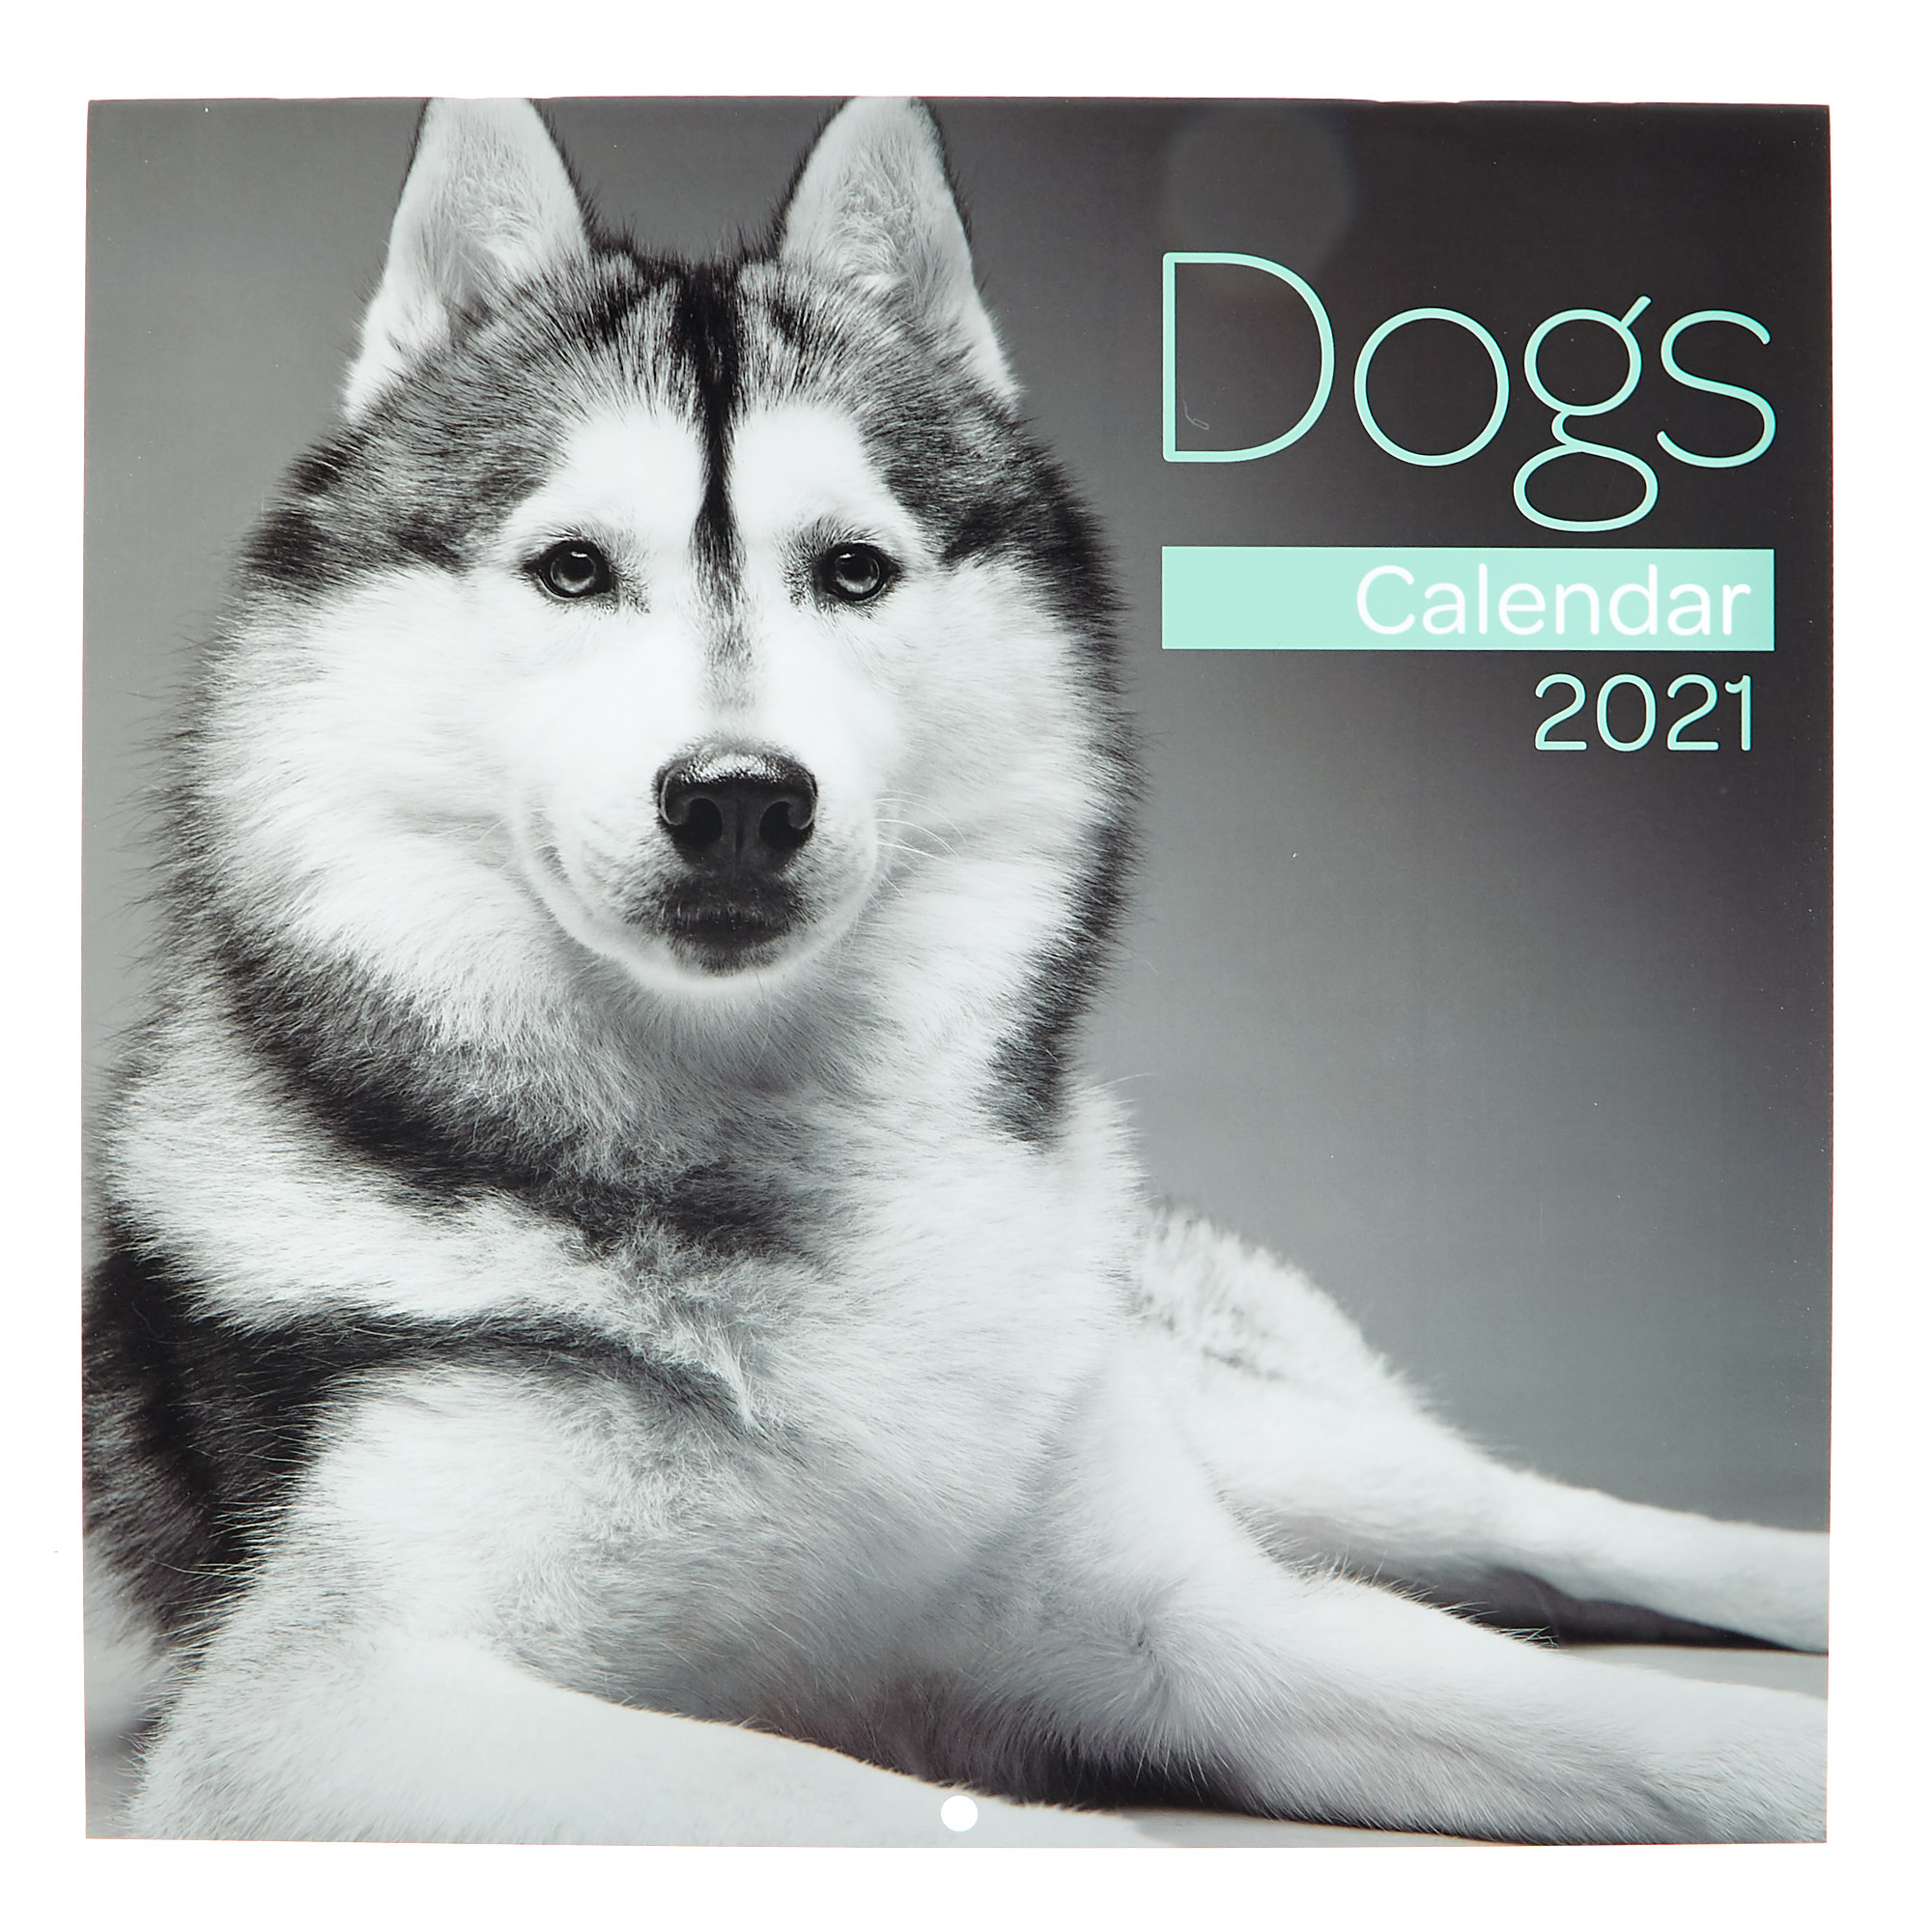 Dogs 2021 Calendar